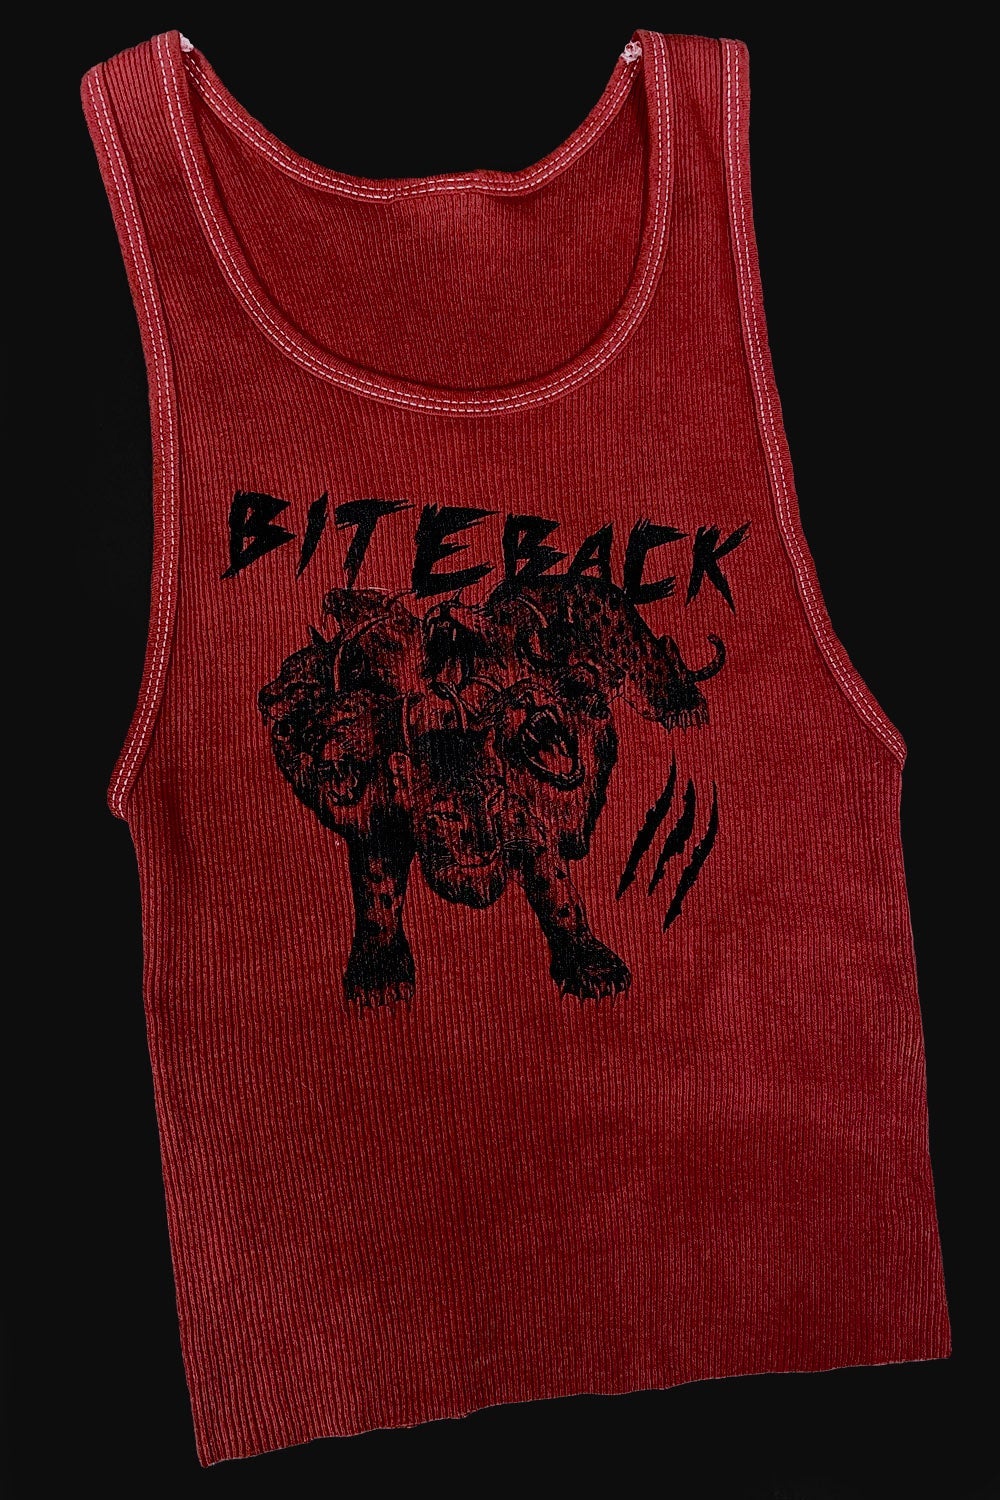 BITEBACK 7-Headed Beast Tank | Hand-Dyed Red